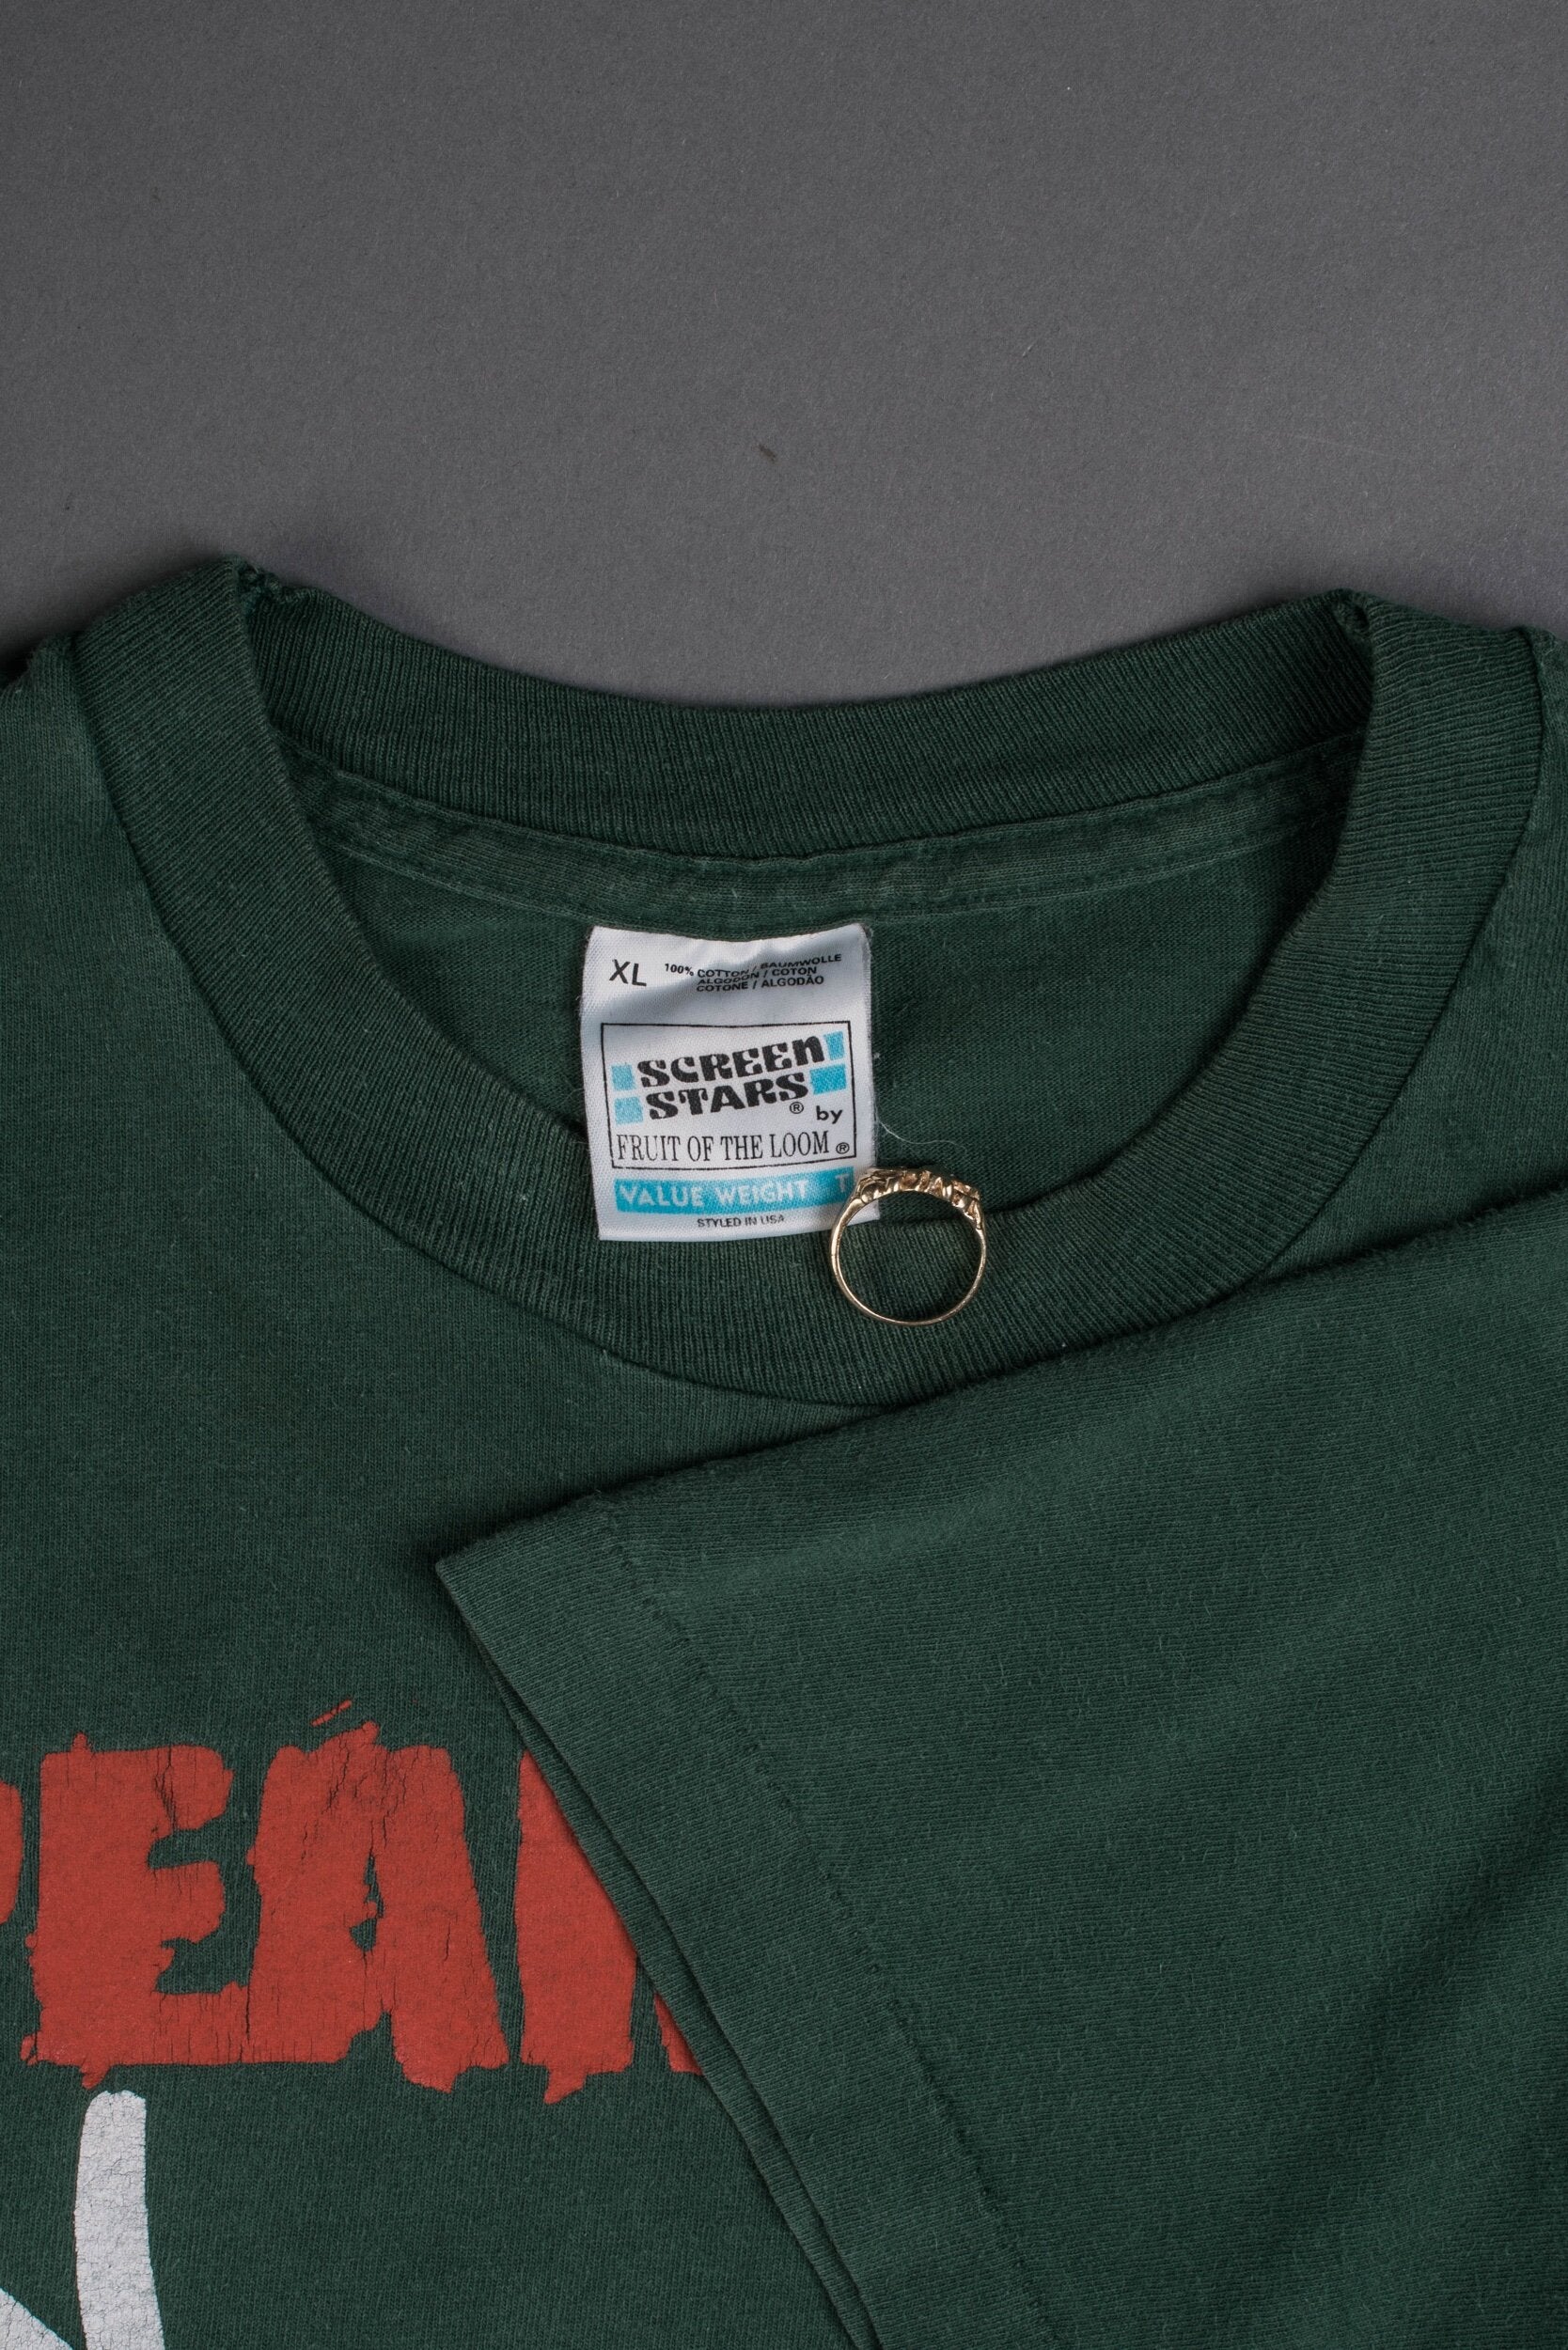 Vintage 90s Pearl Jam Vital T Shirt - BIDSTITCH